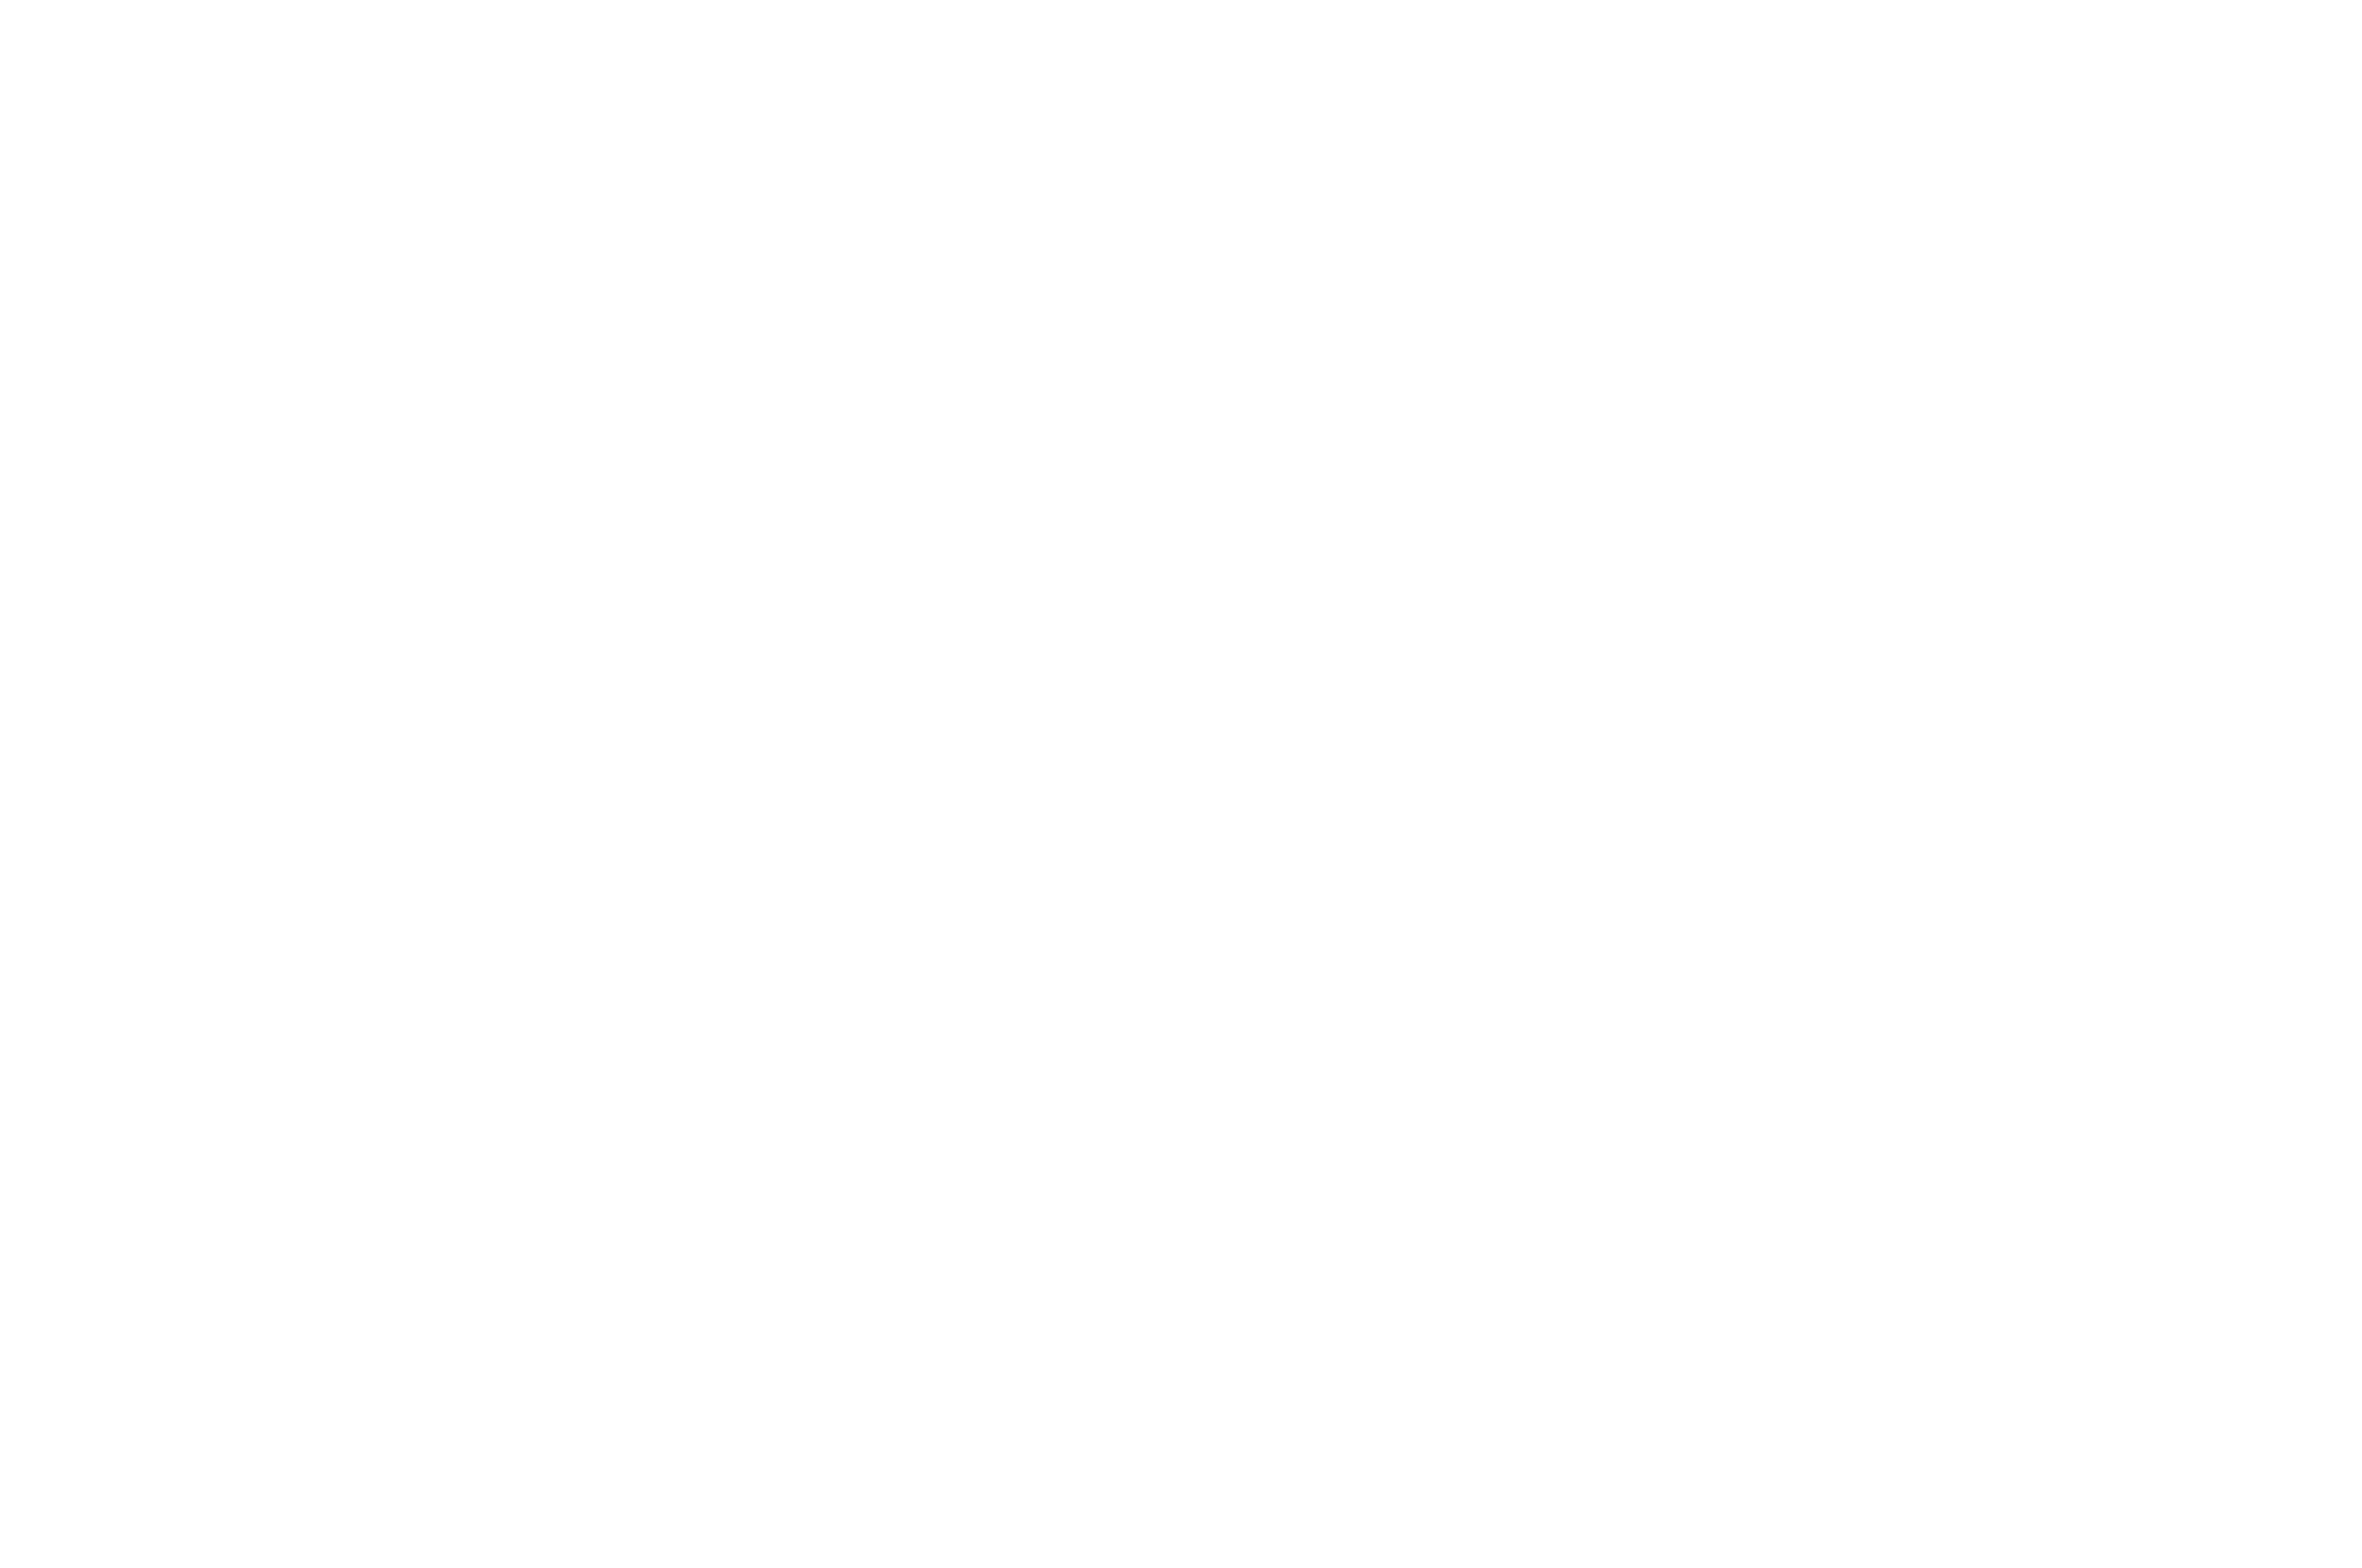 OFFICIALSELECTION-PortlandComedyFilmFestival-SUMMER2020 (1).png